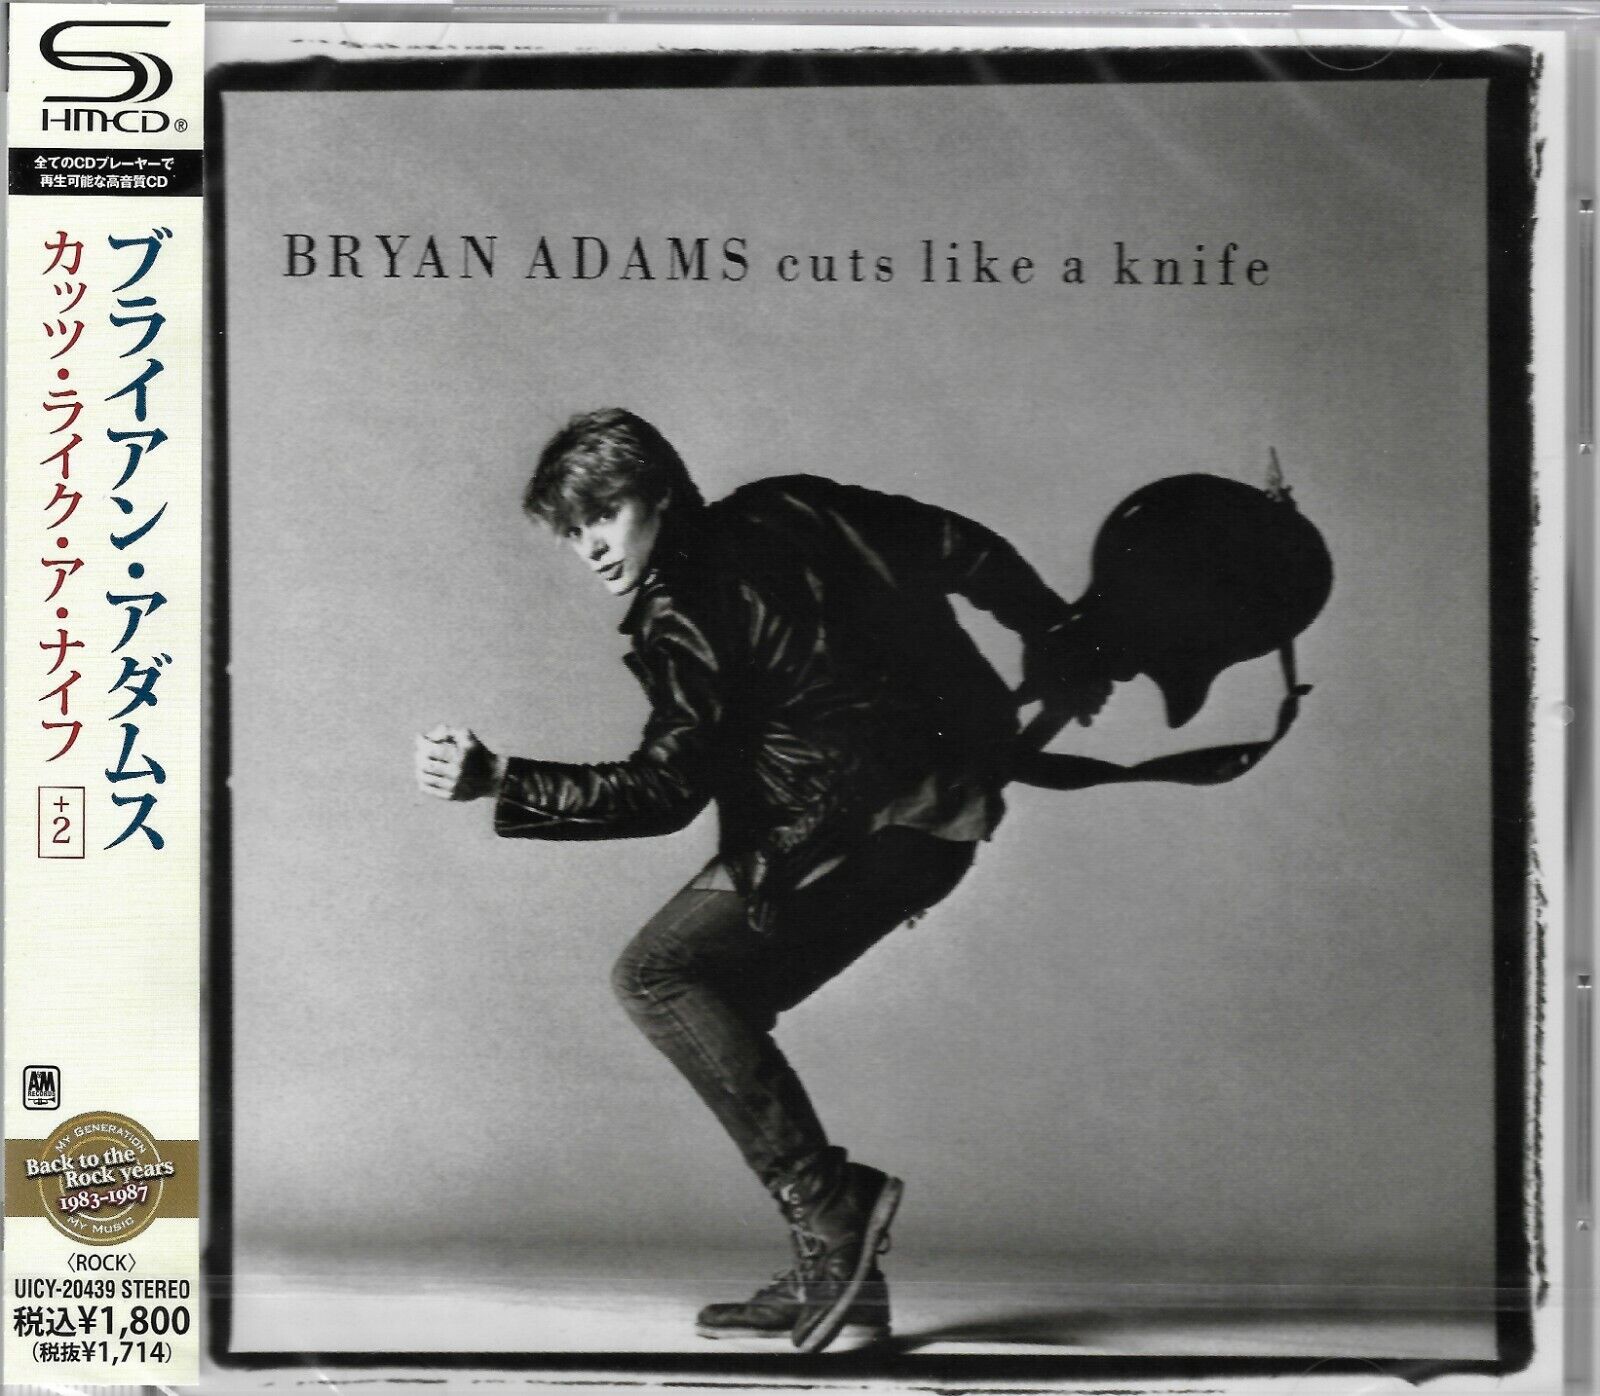 Image 1 - BRYAN ADAMS CUTS LIKE A KNIFE 2013 JAPAN SHM RMST CD+2  NEW/SEALED GIFT QUALITY!